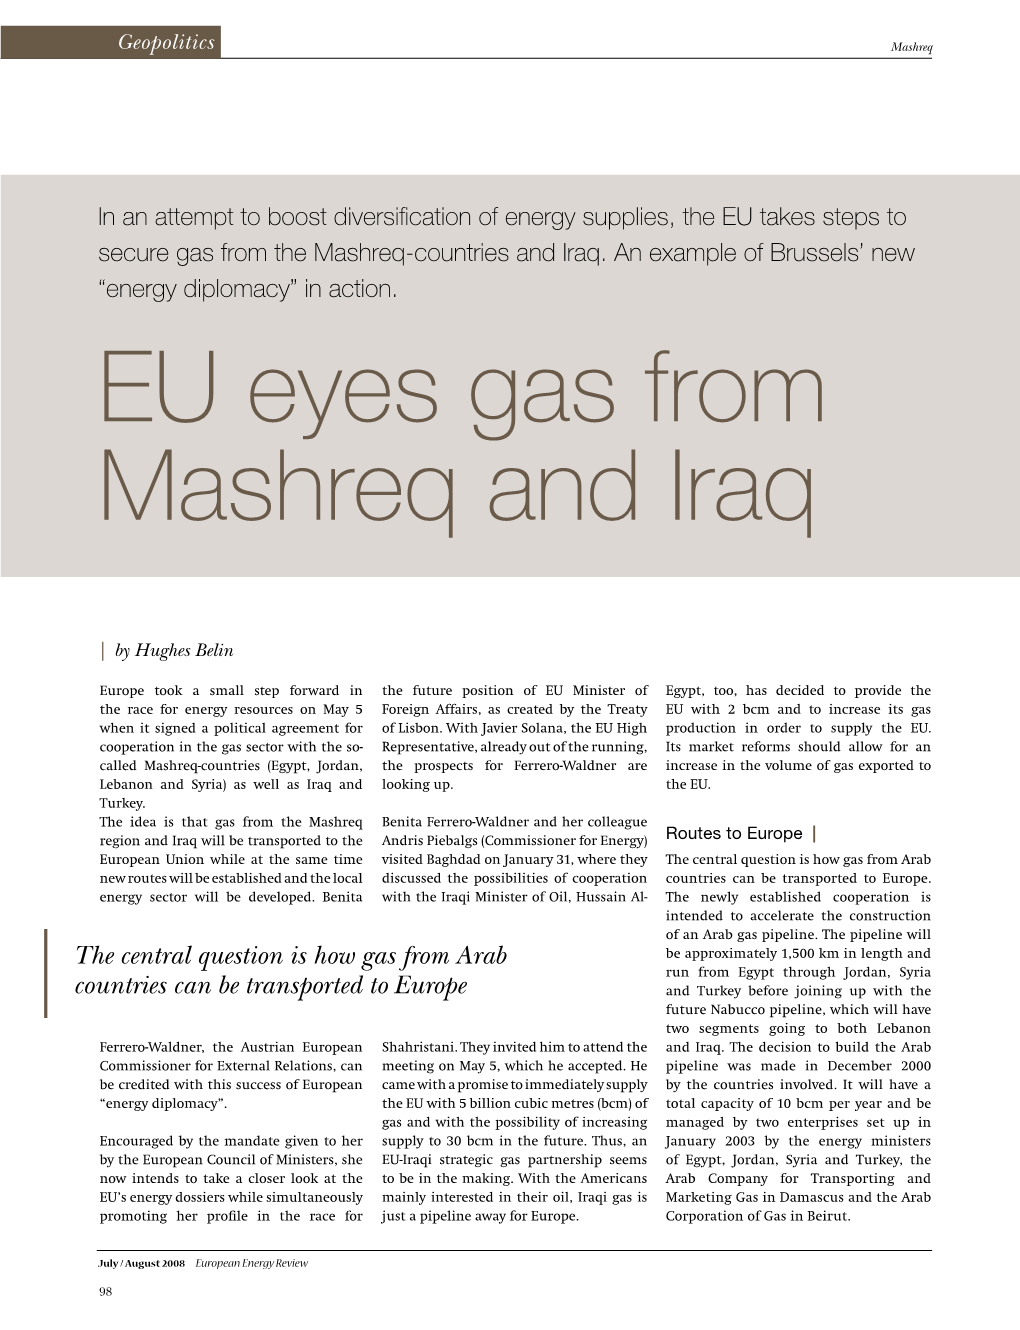 EU Eyes Gas from Mashreq and Iraq